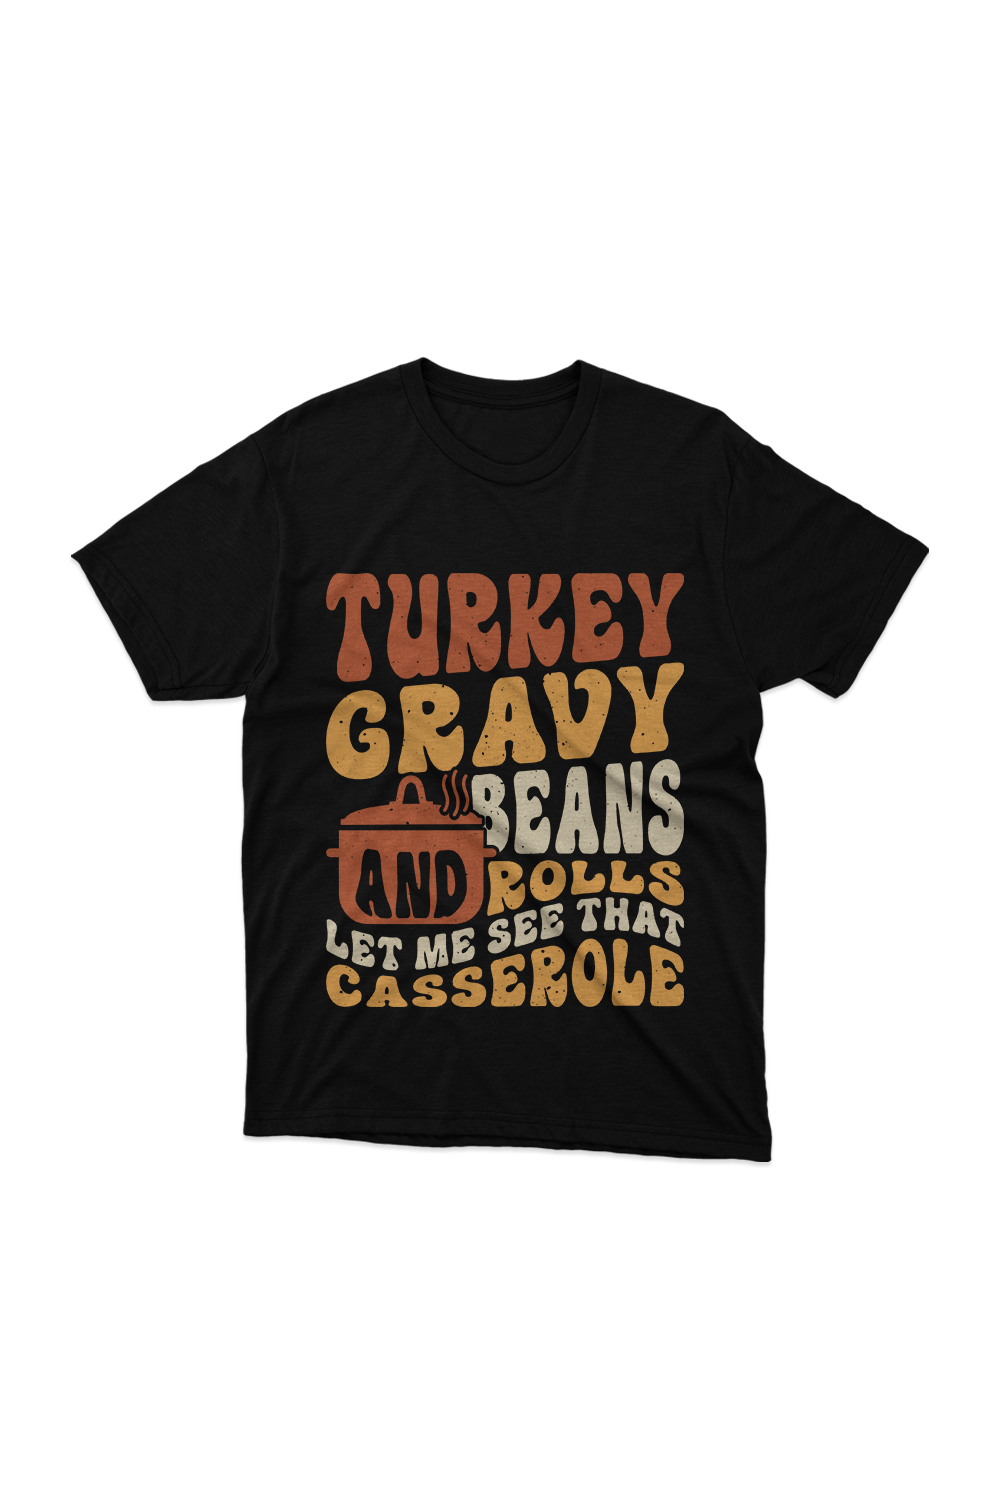 Turkey gravy beans thanksgiving t shirt design pinterest preview image.